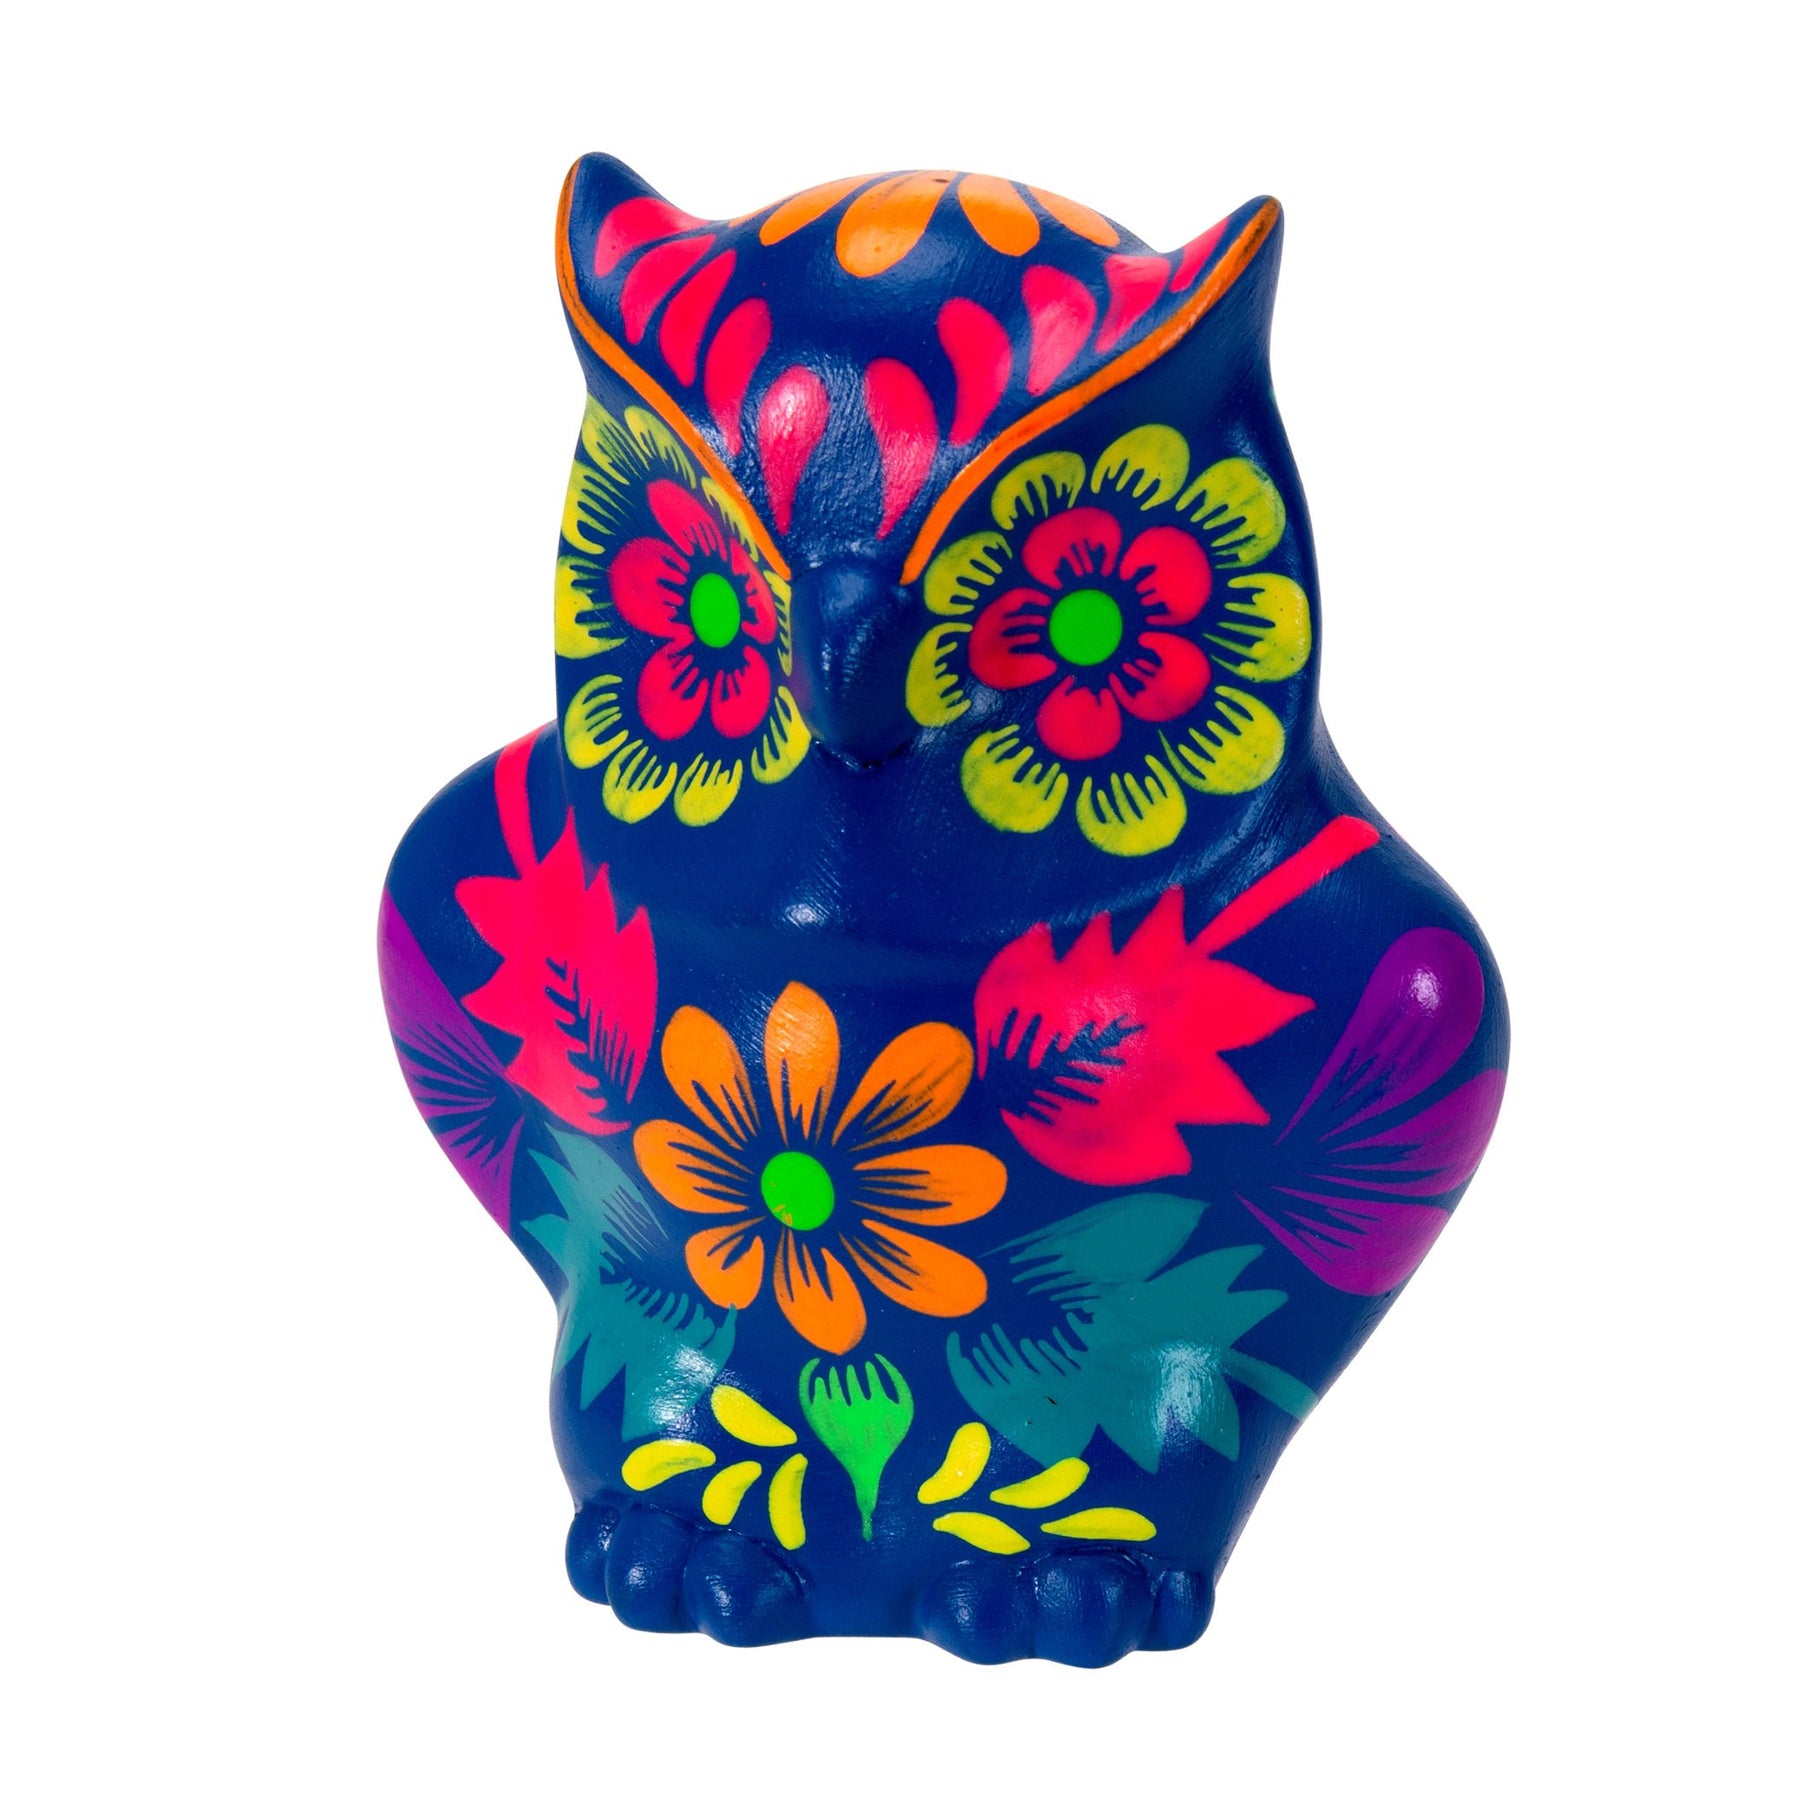 Fiesta Owl Blue - Small Ceramic Figurine